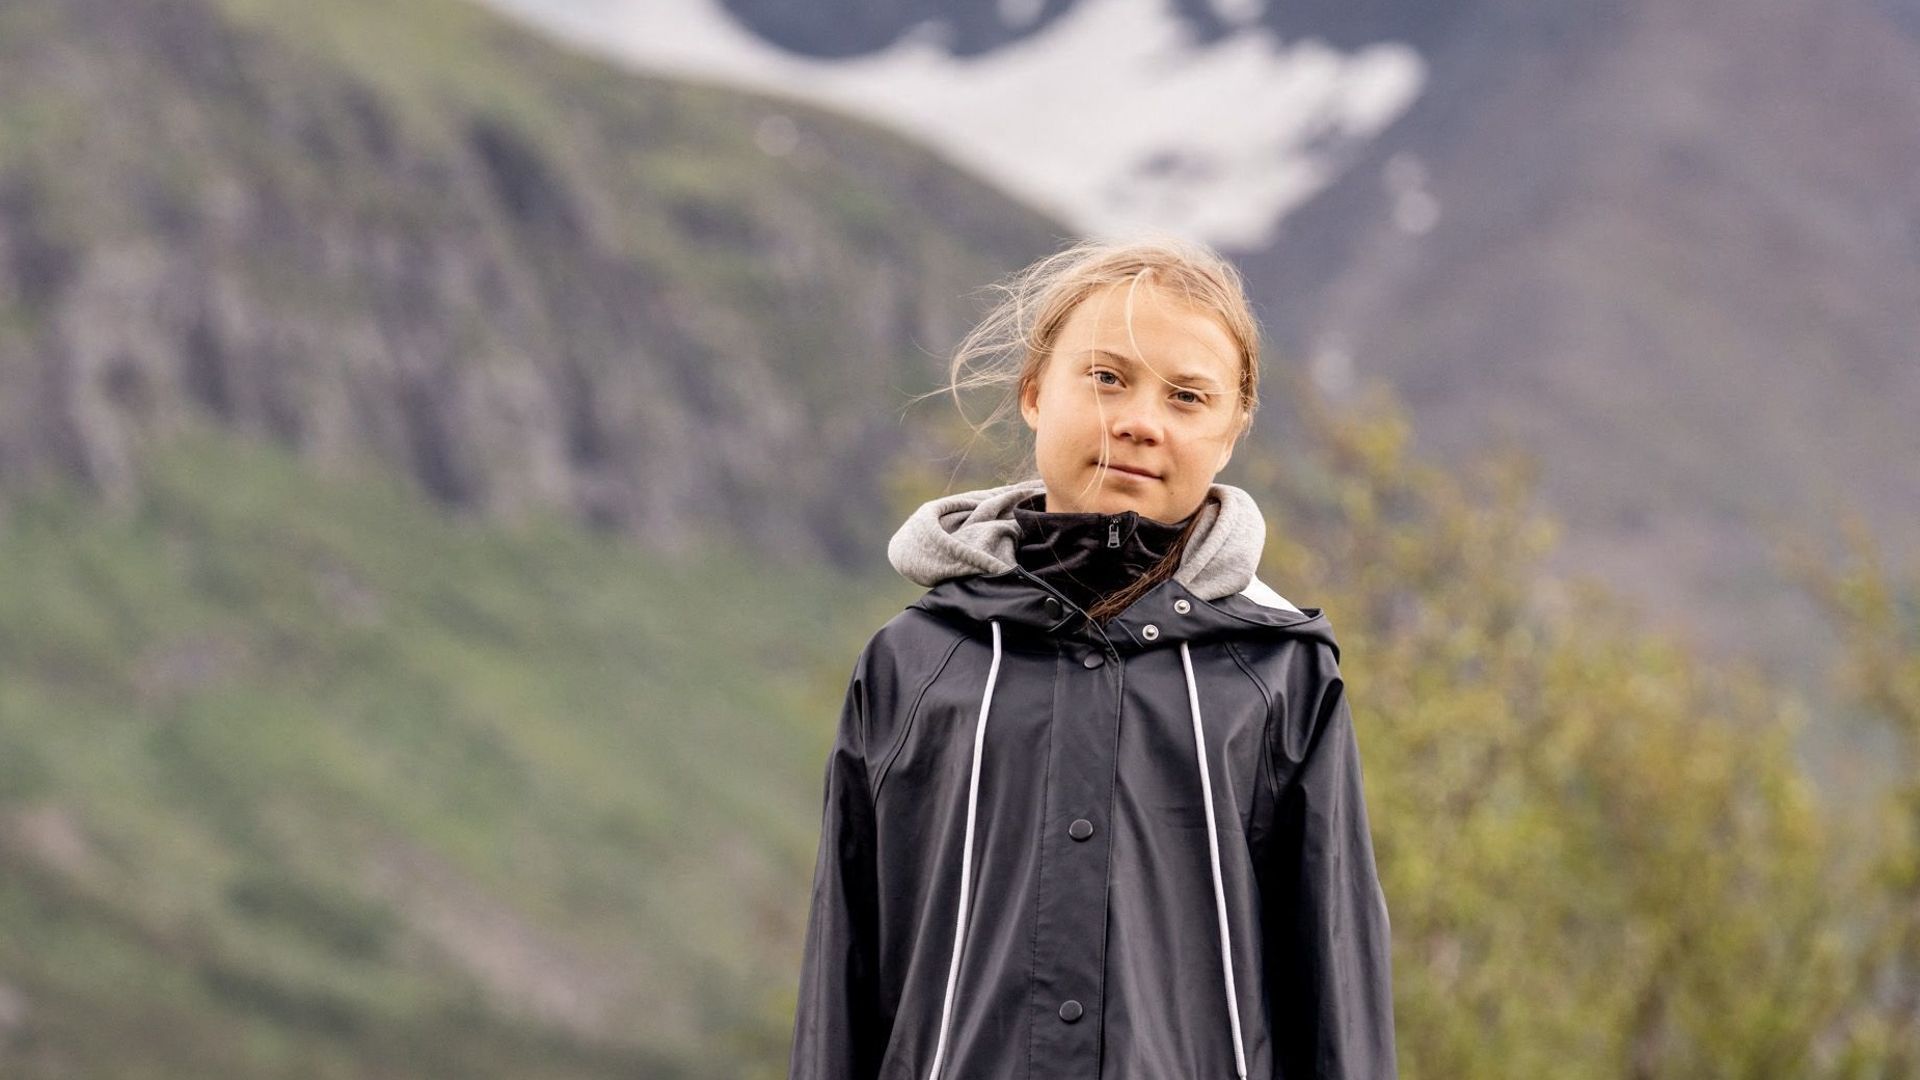 Greta Thunberg en une de "Vogue Scandinavie", fustige l’industrie de la mode